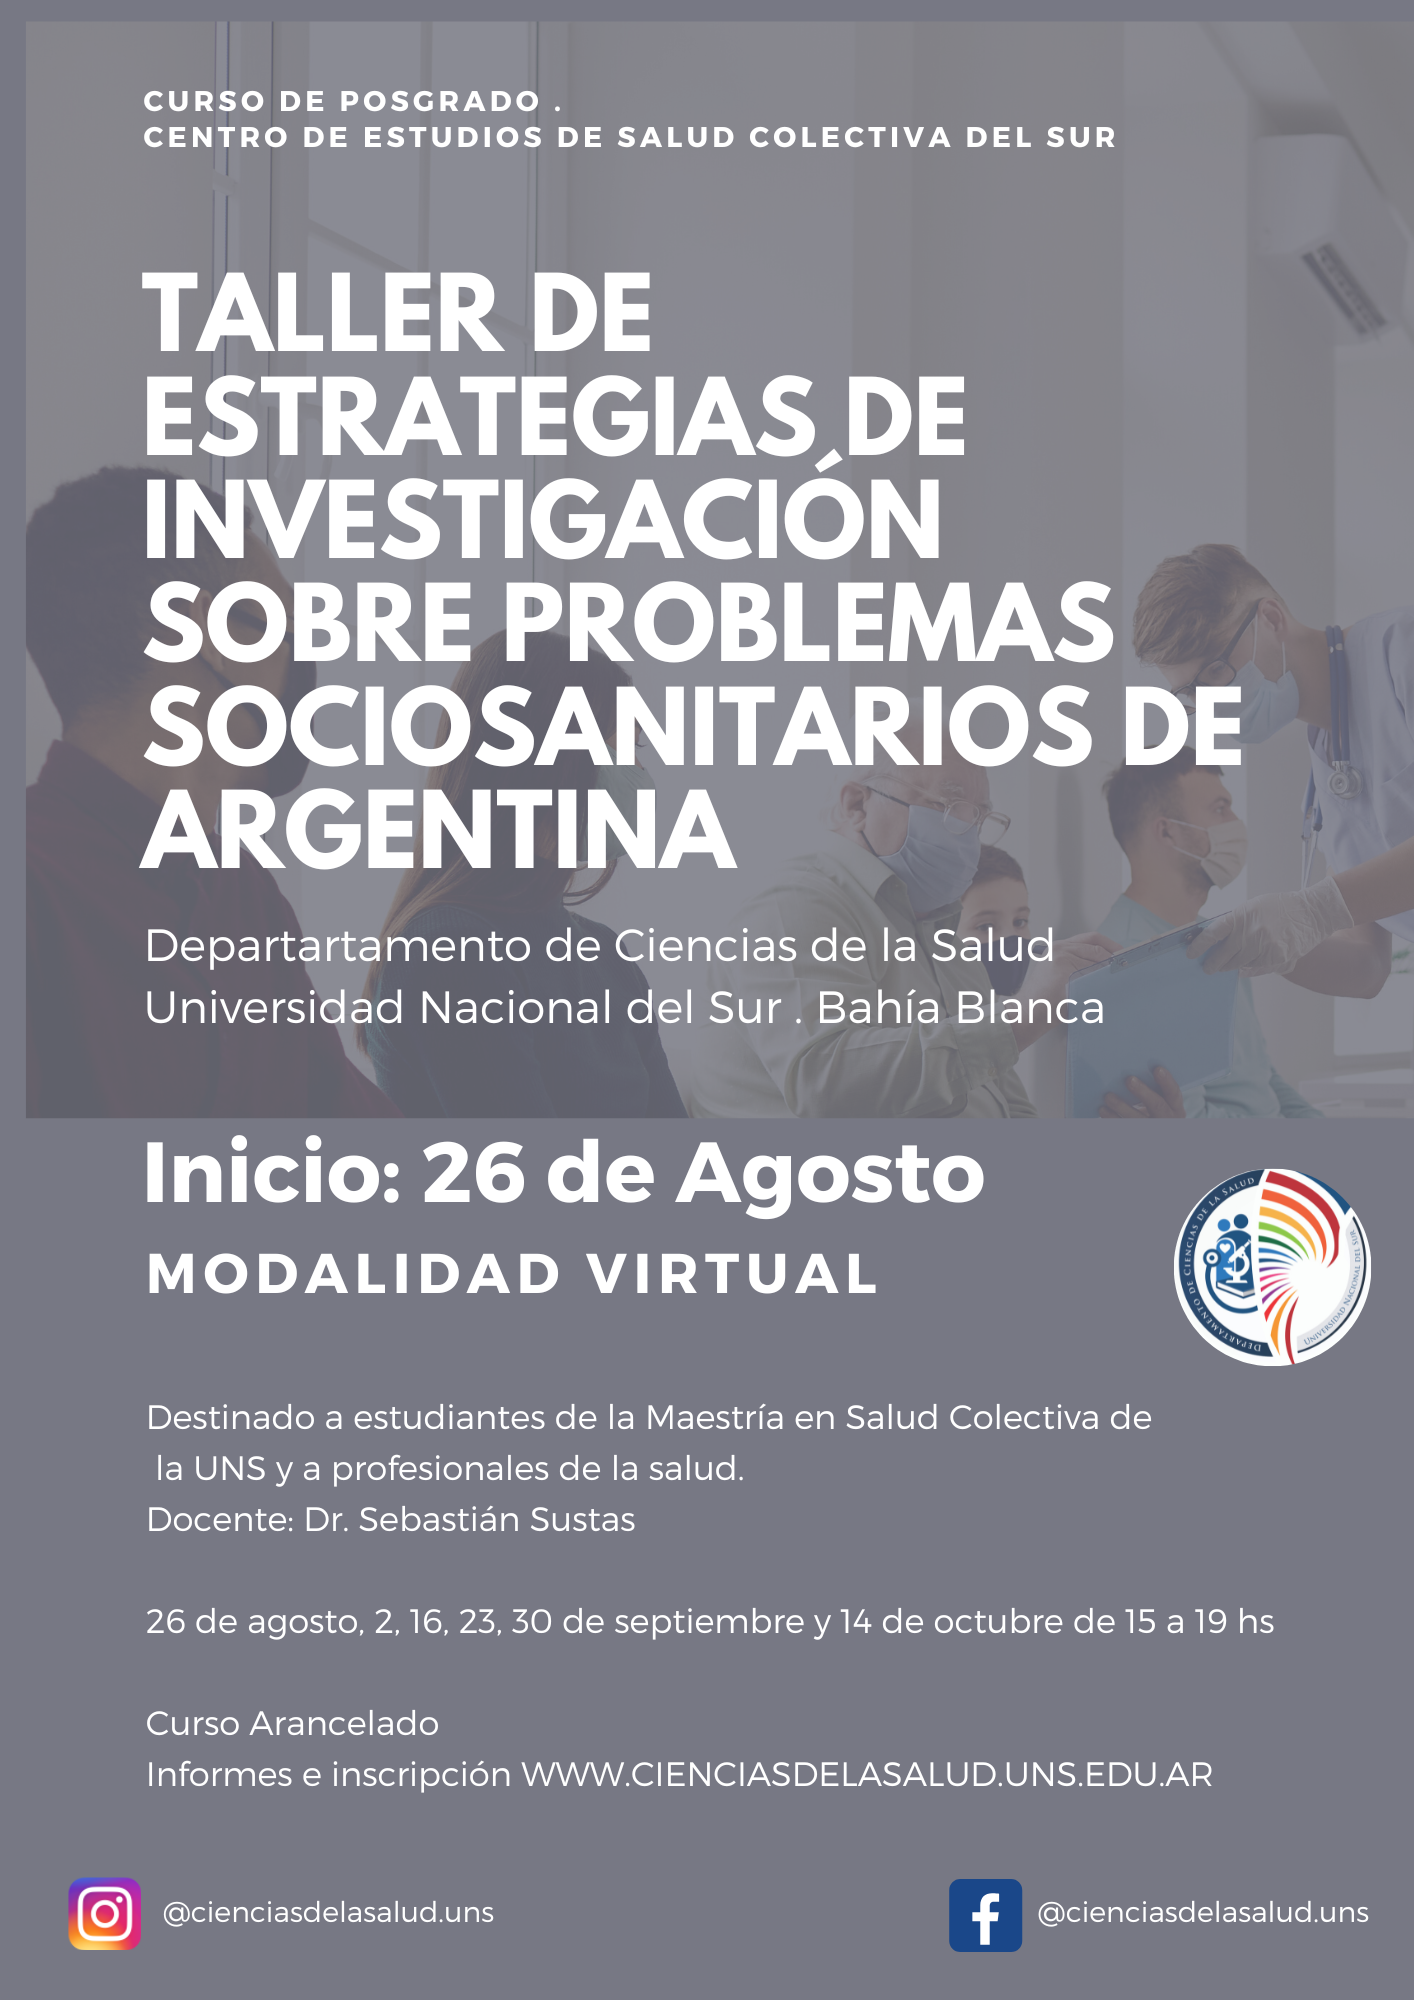 Taller de estrategias de investigación sobre problemas sociosanitarios de Argentina